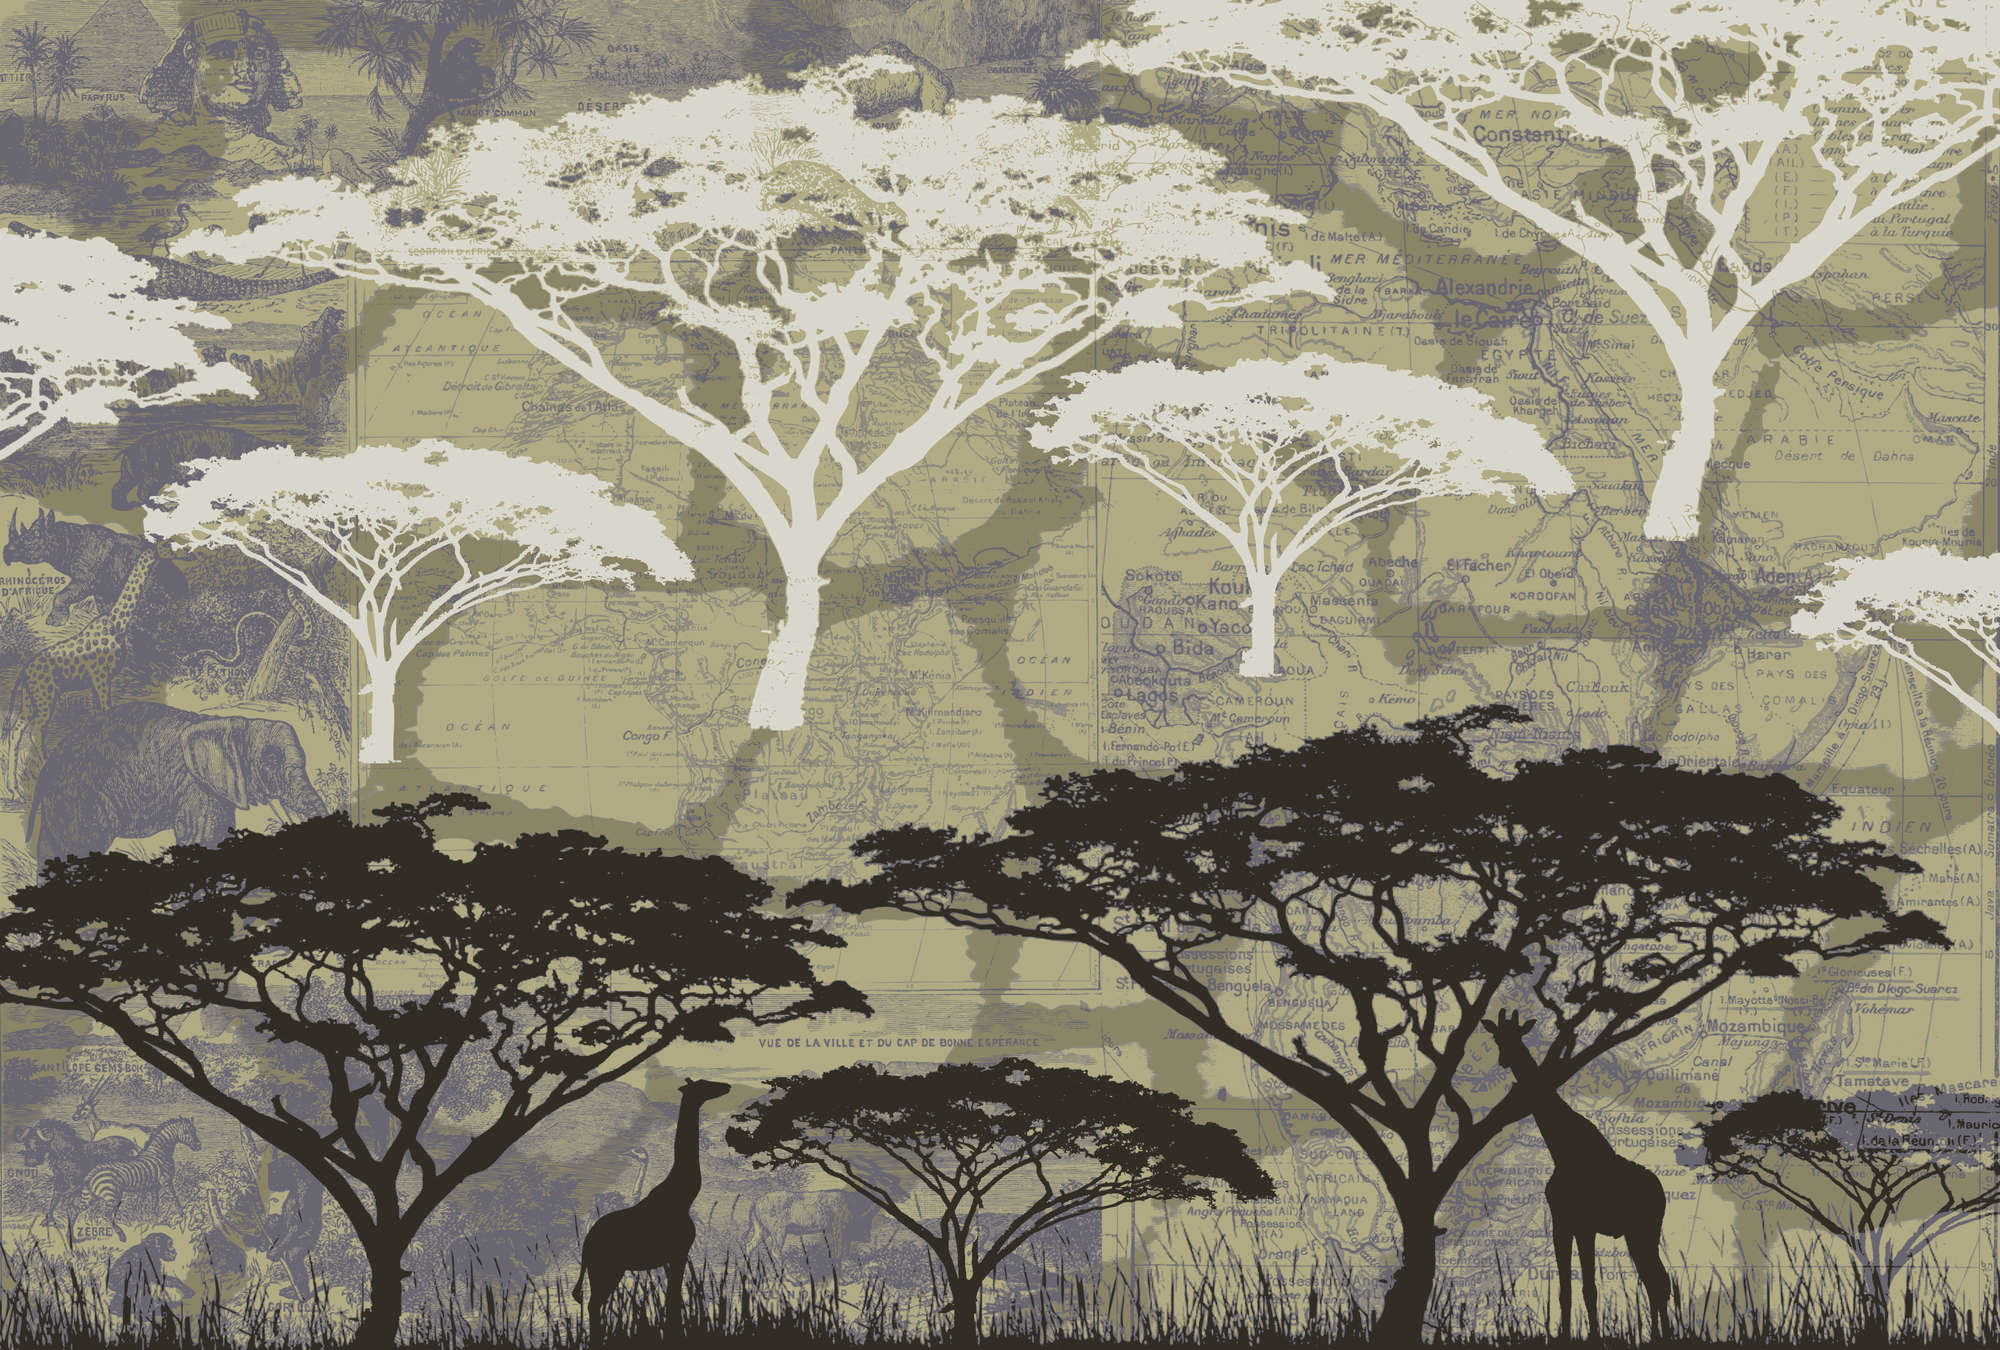             Savannah - Fotomurali in stile africano con motivo ad albero
        